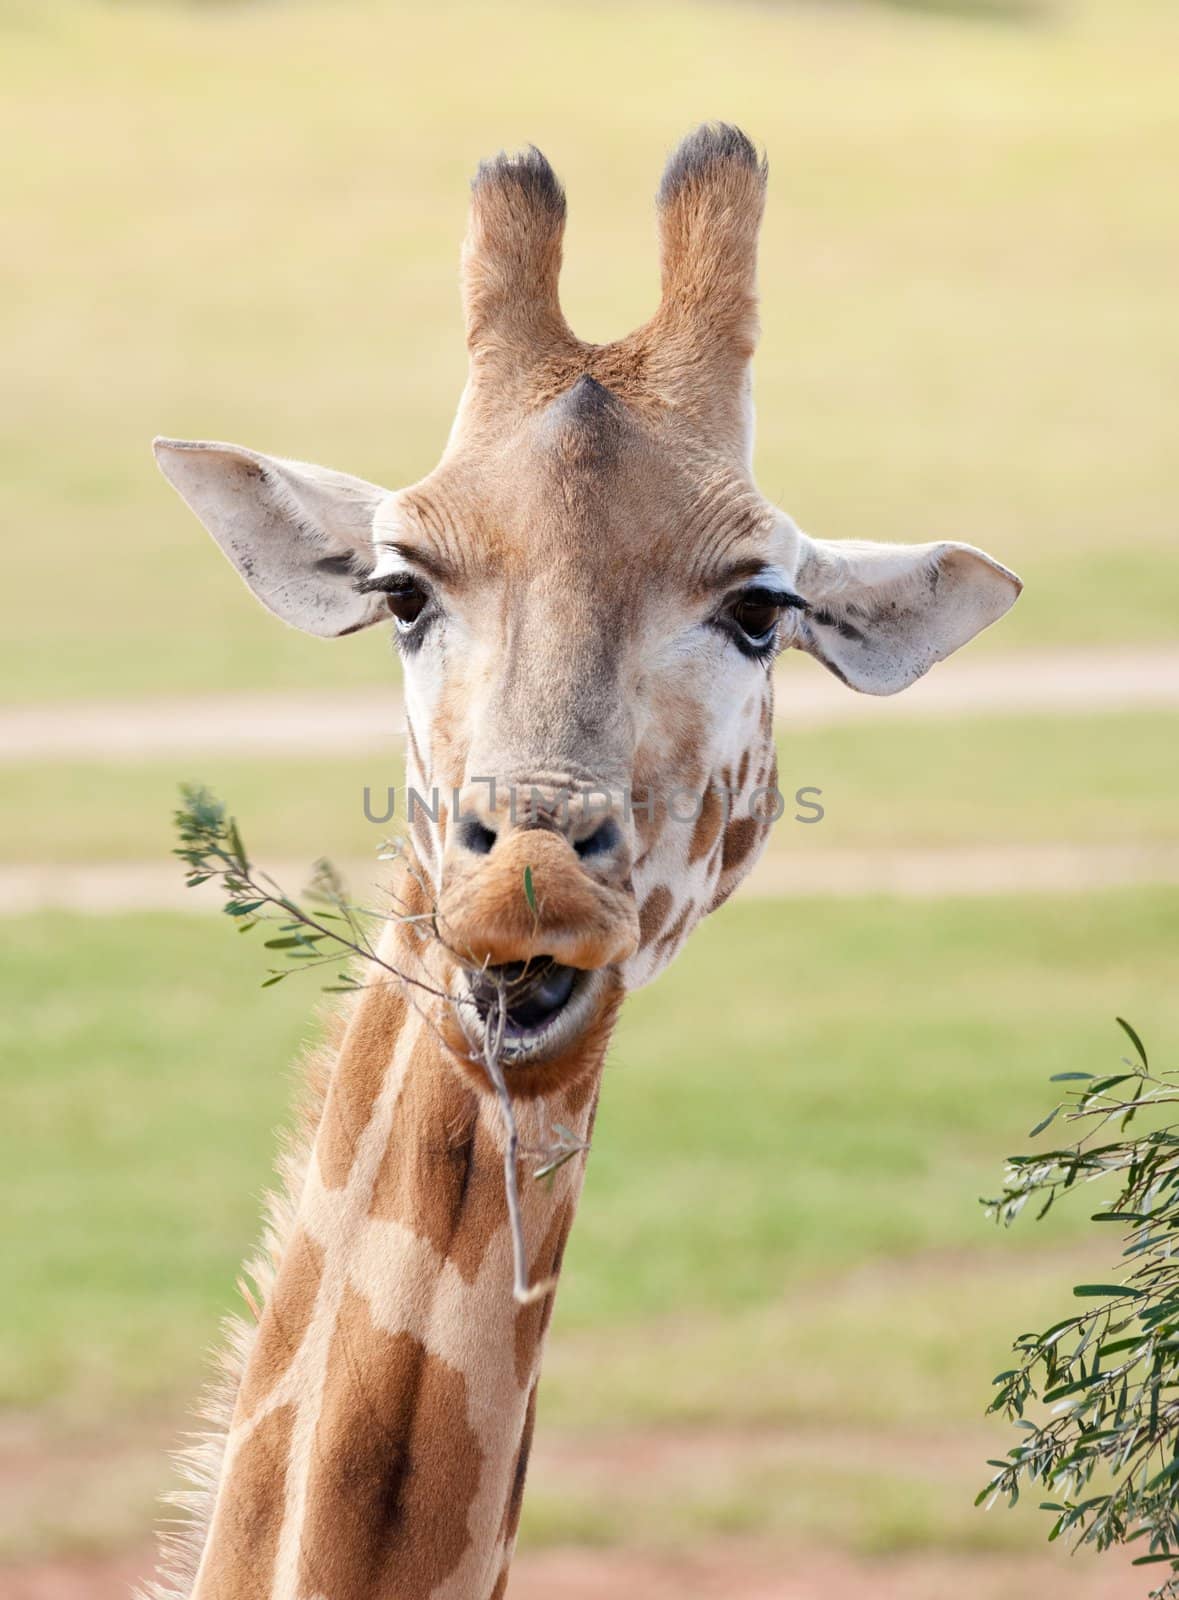 african giraffe in natural environment up close